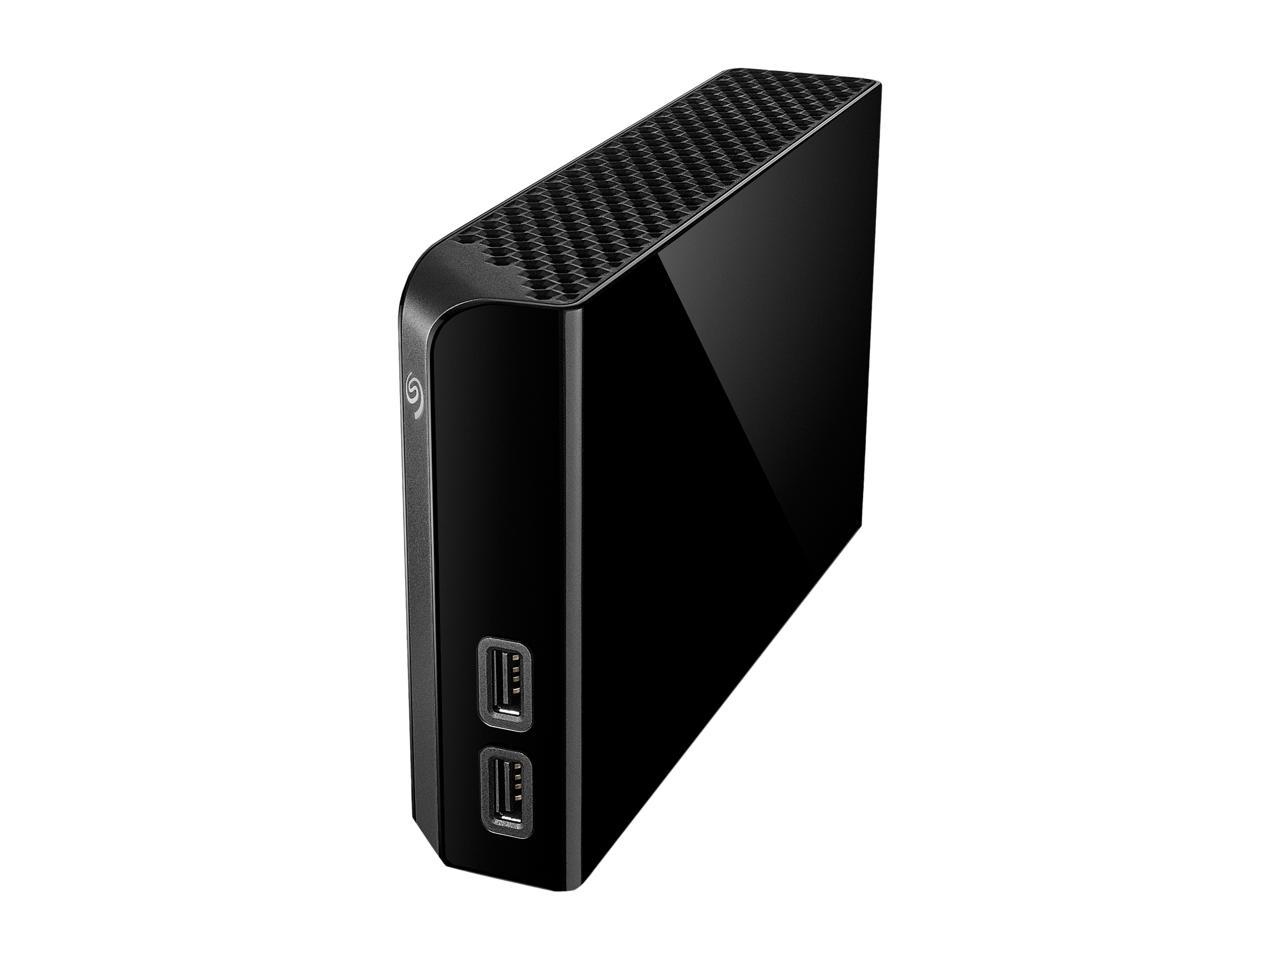 Seagate Backup Plus Hub 8Tb Usb 3.0 Hard Drives - Desktop External Stel8000100